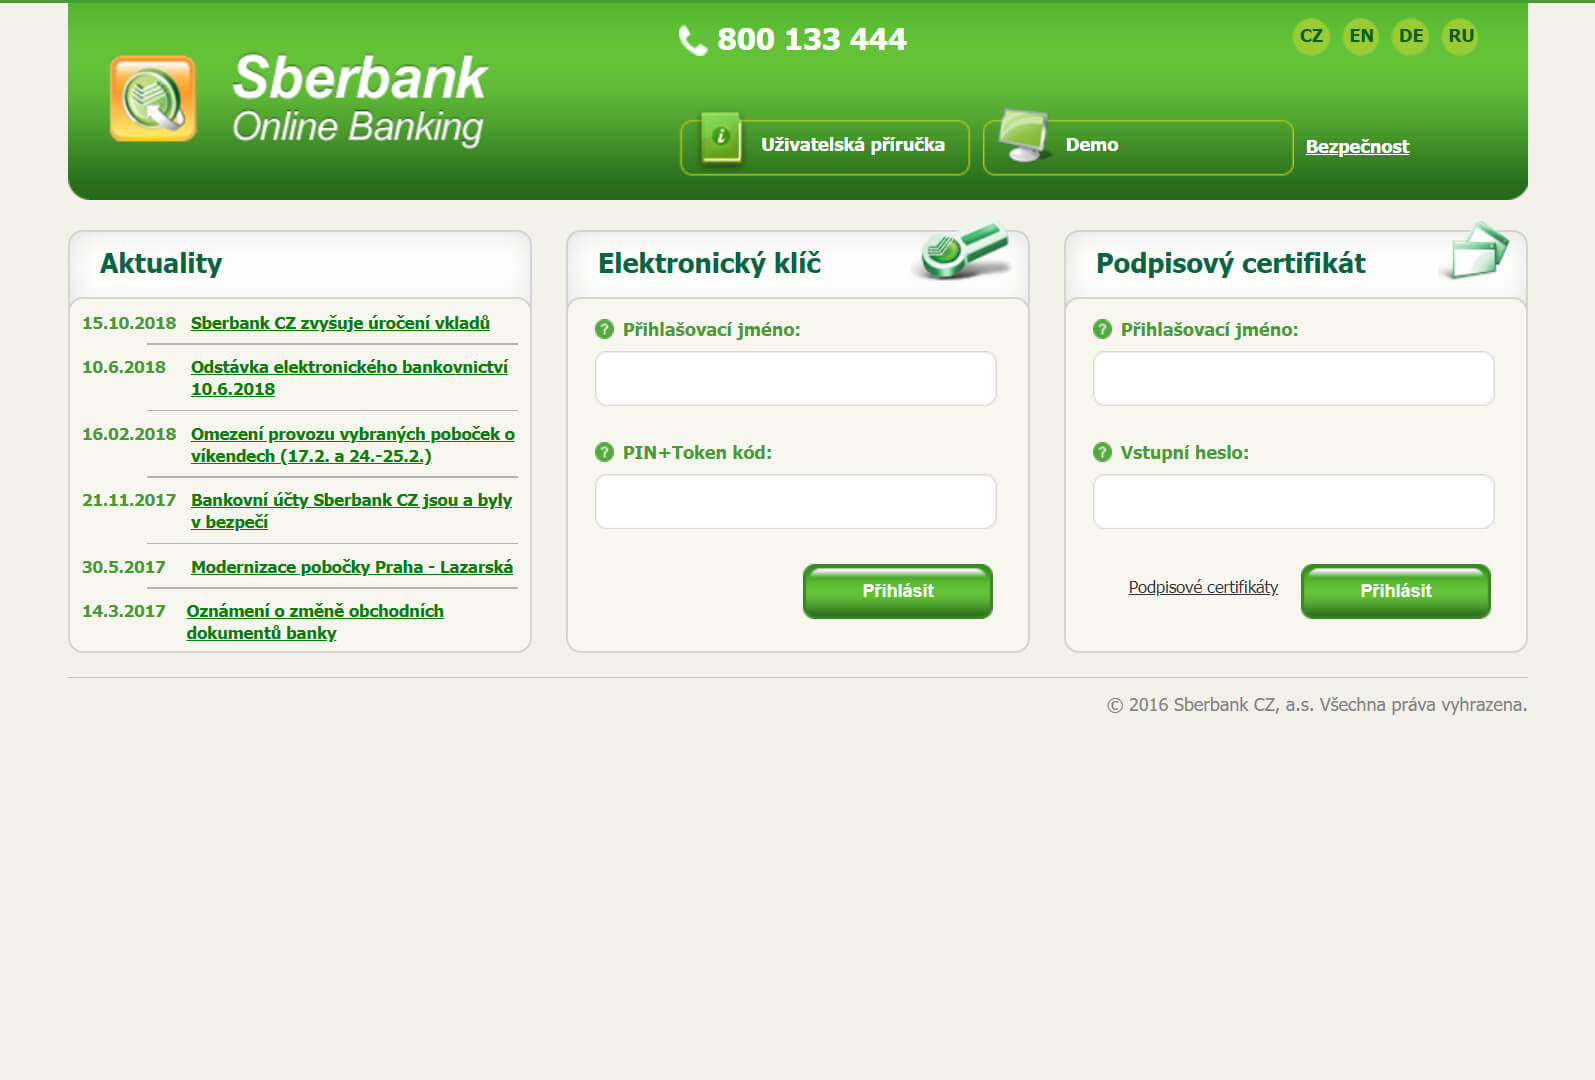 Sberbank accounts